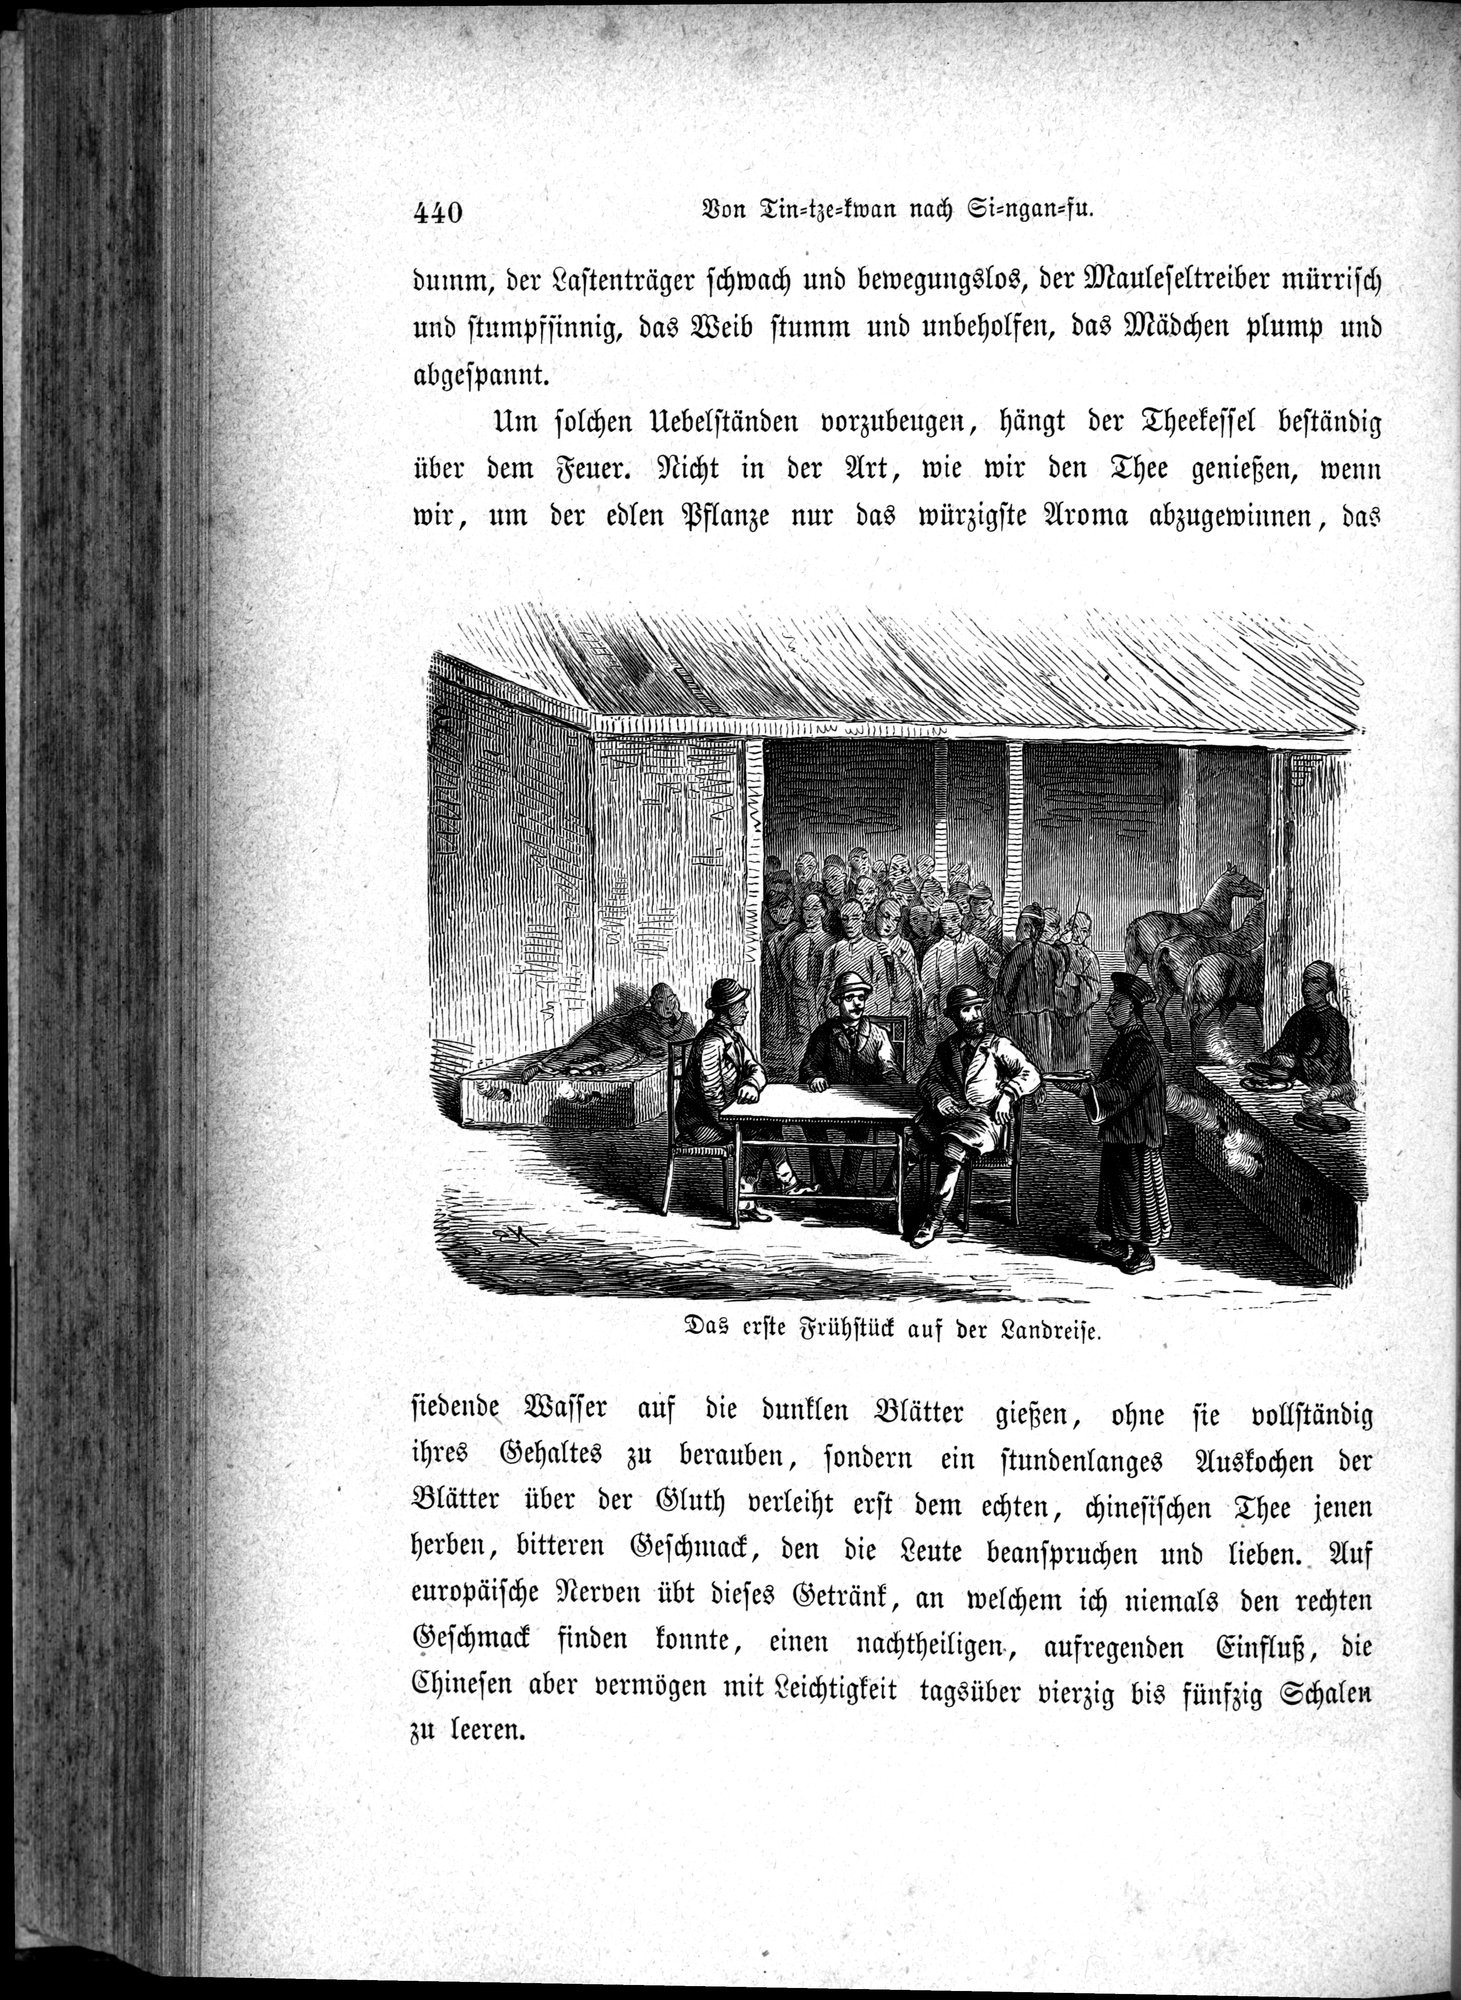 Im fernen Osten : vol.1 / Page 464 (Grayscale High Resolution Image)